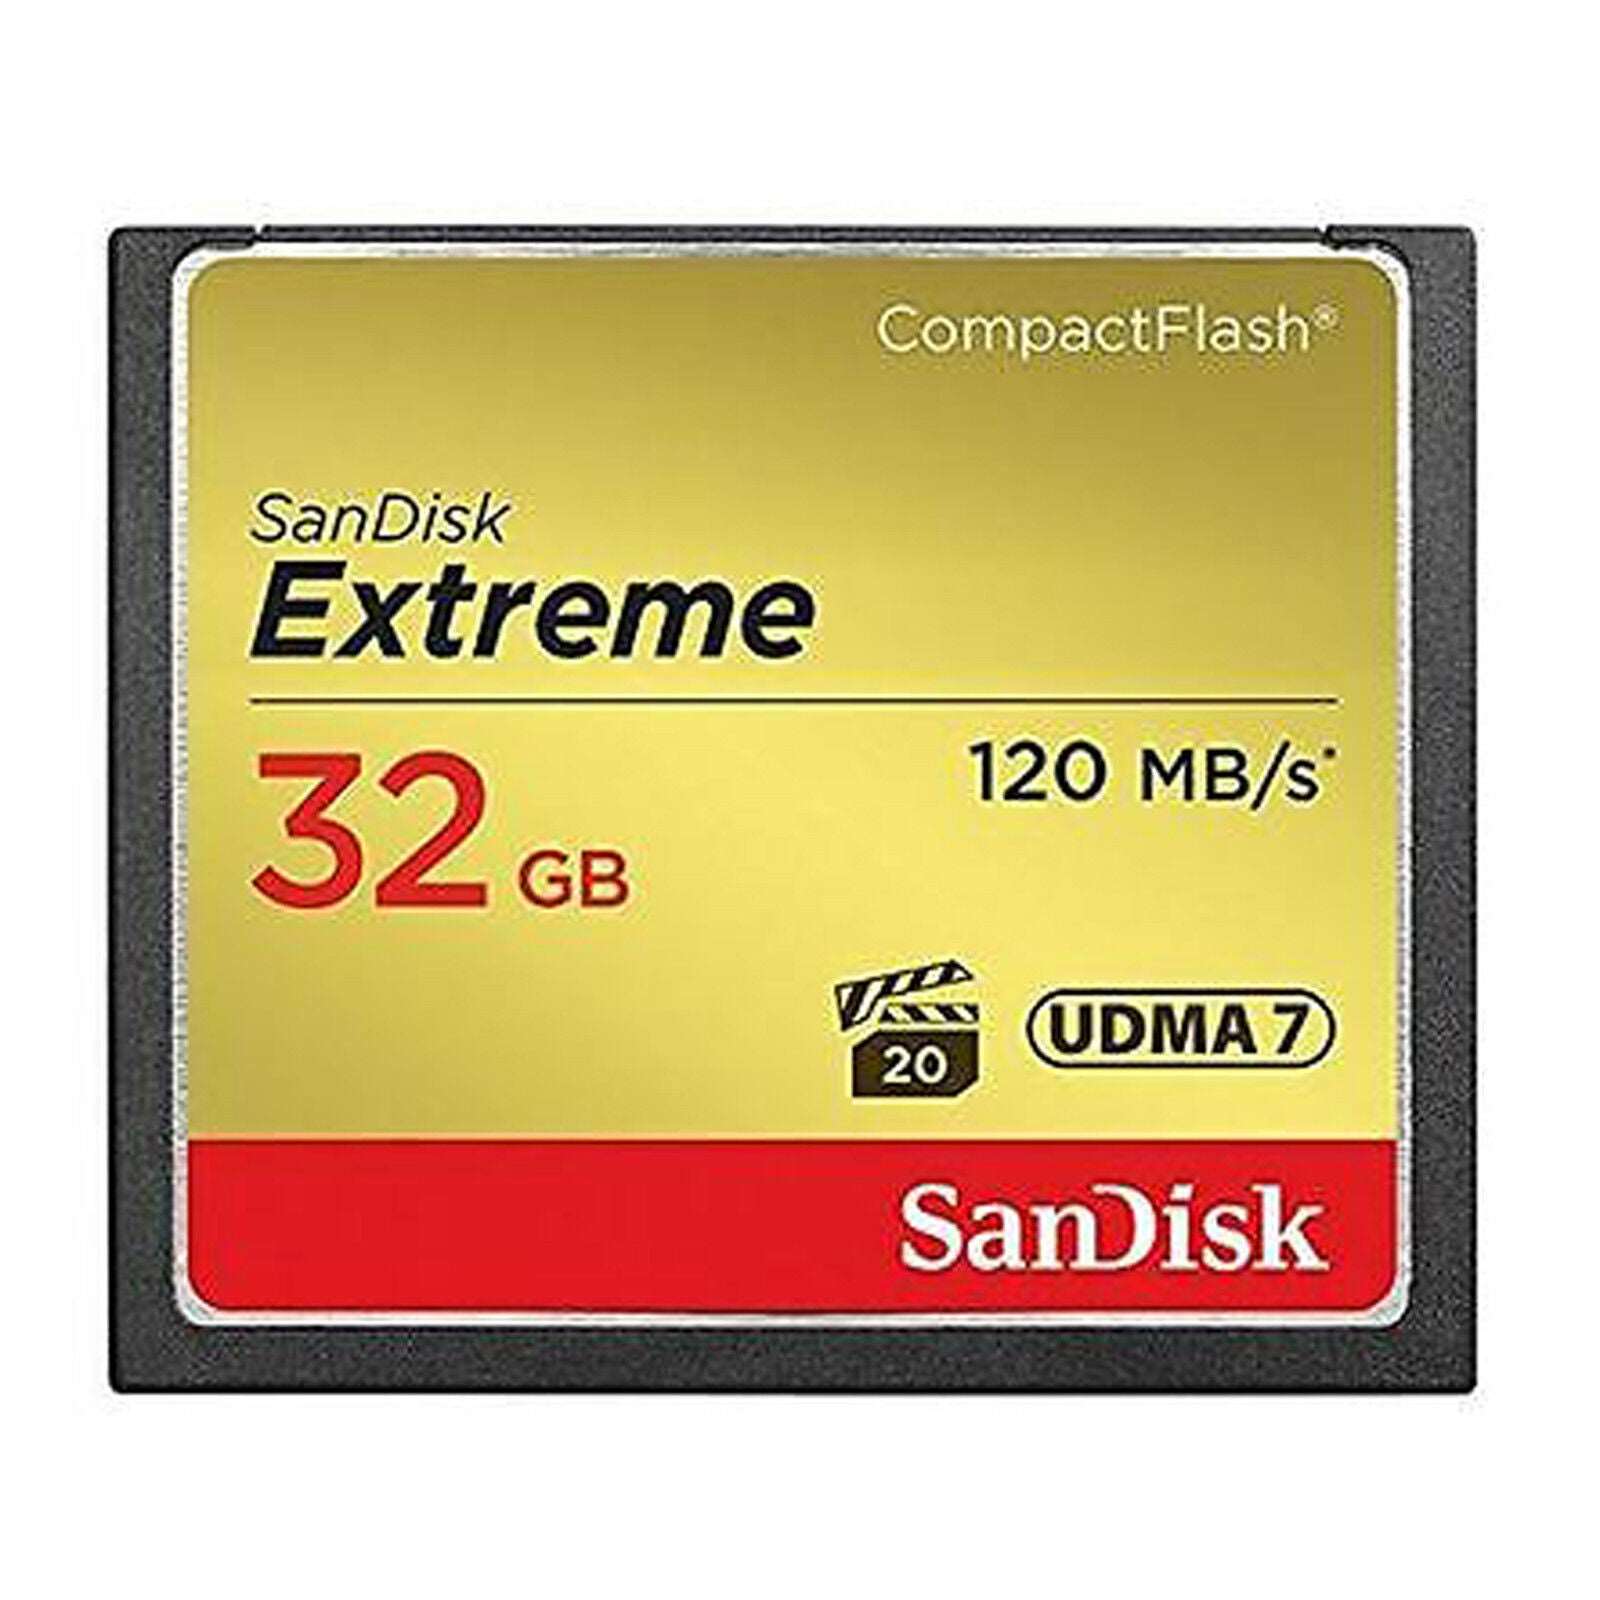 SanDisk Extreme CompactFlash Memory Card 